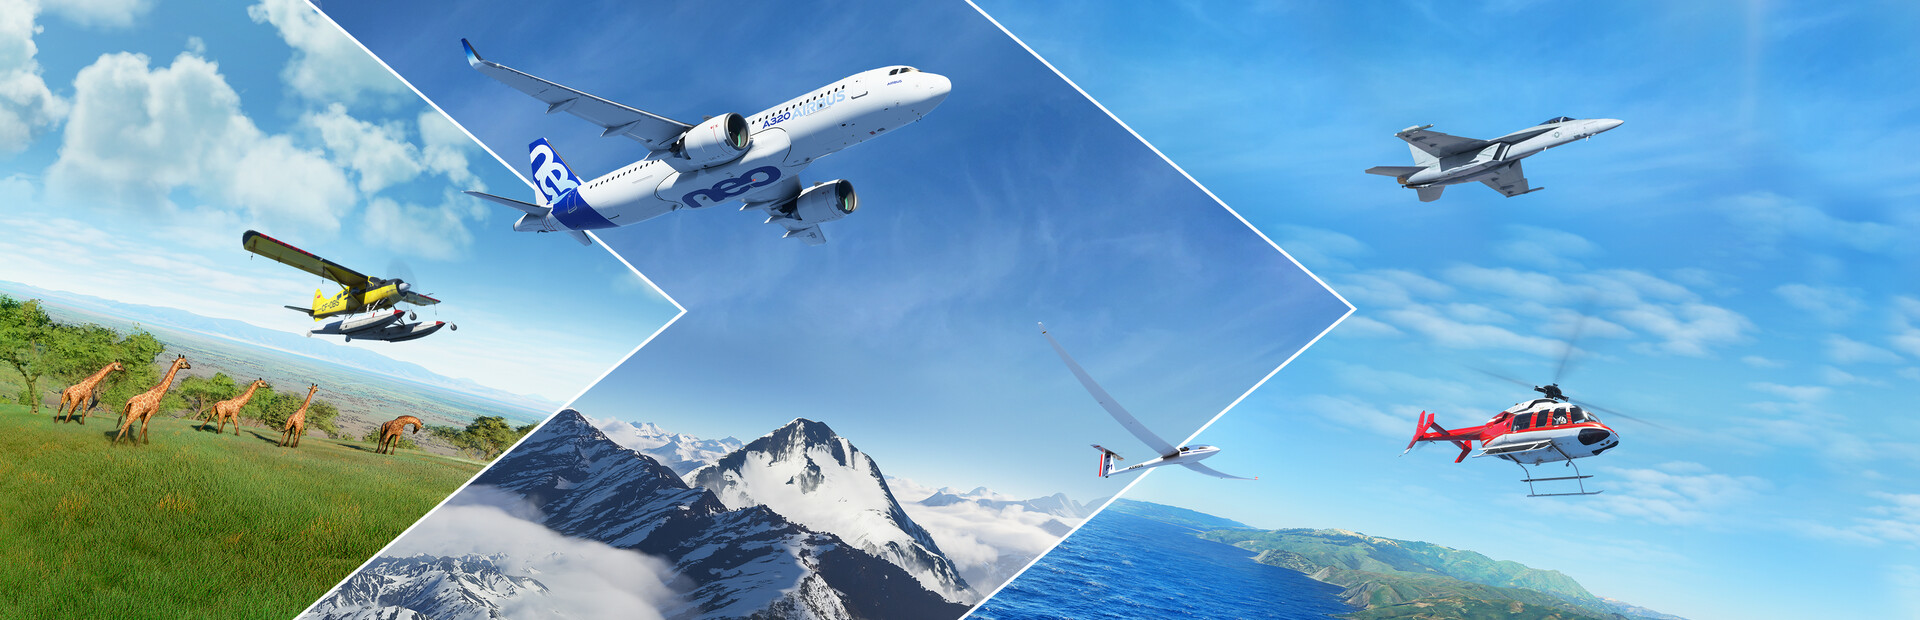 Microsoft Flight Simulator 40th Anniversary Edition cover image